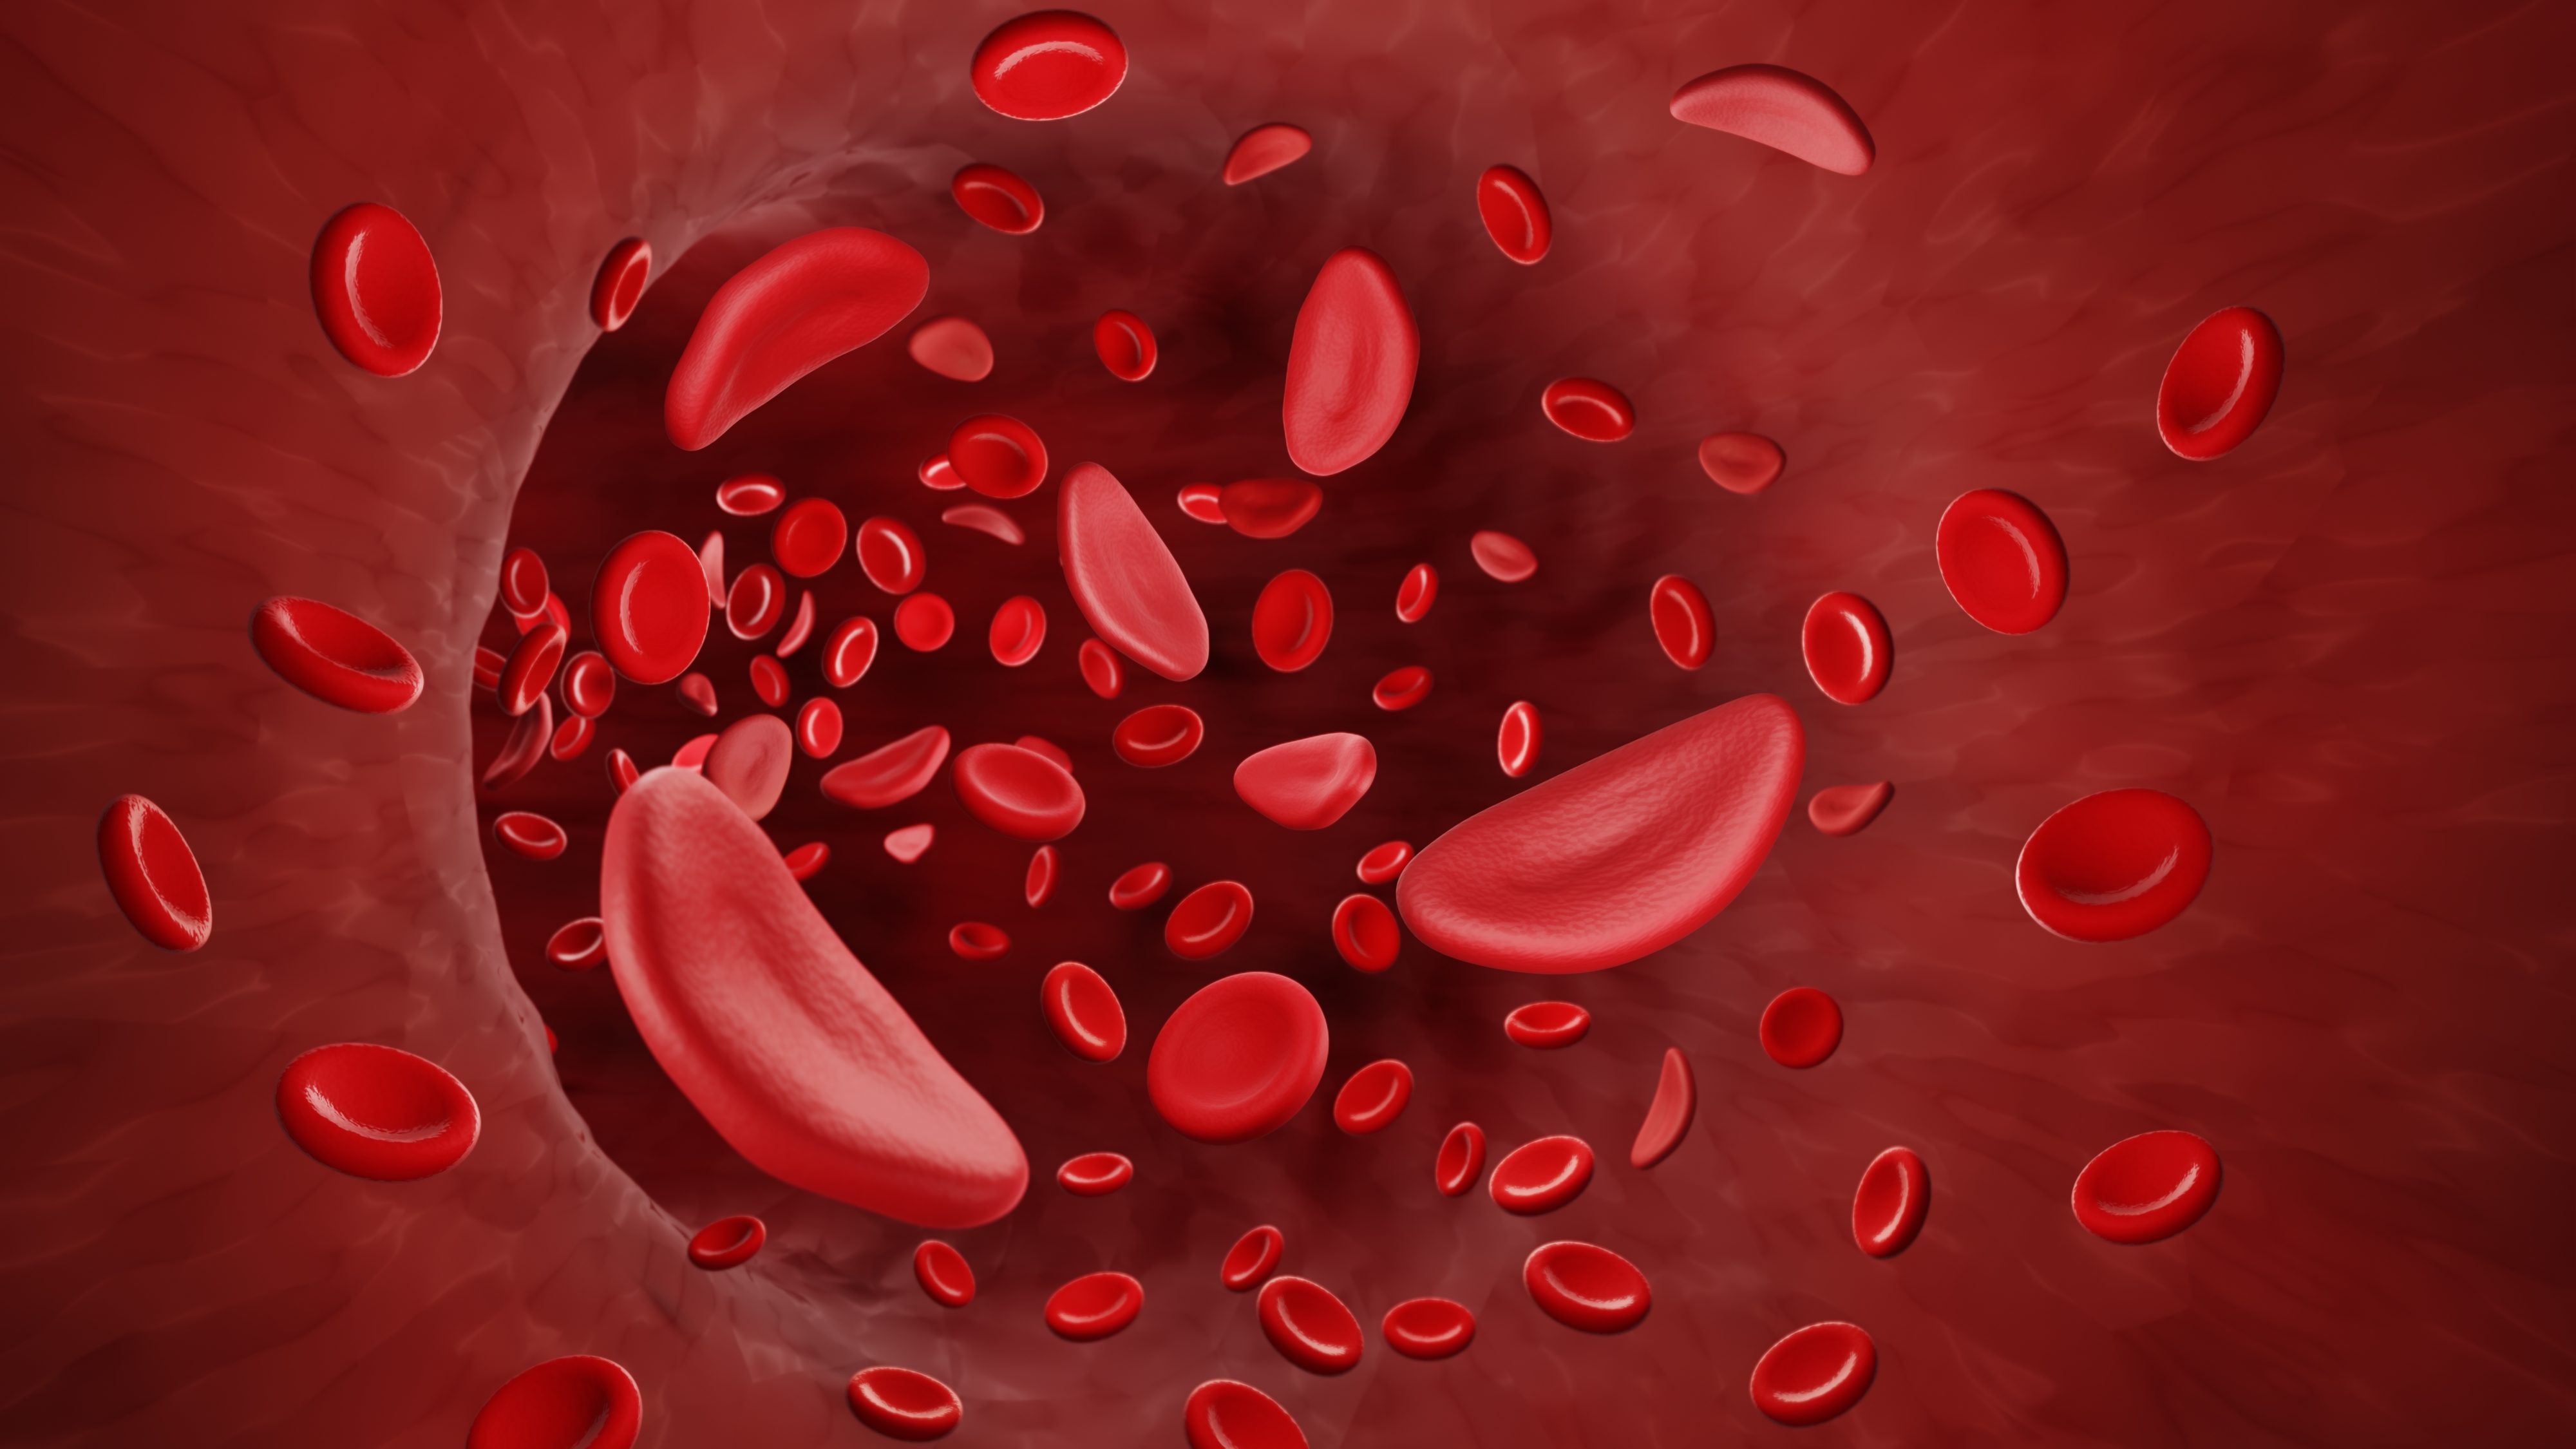 Sickle cell blood illustration